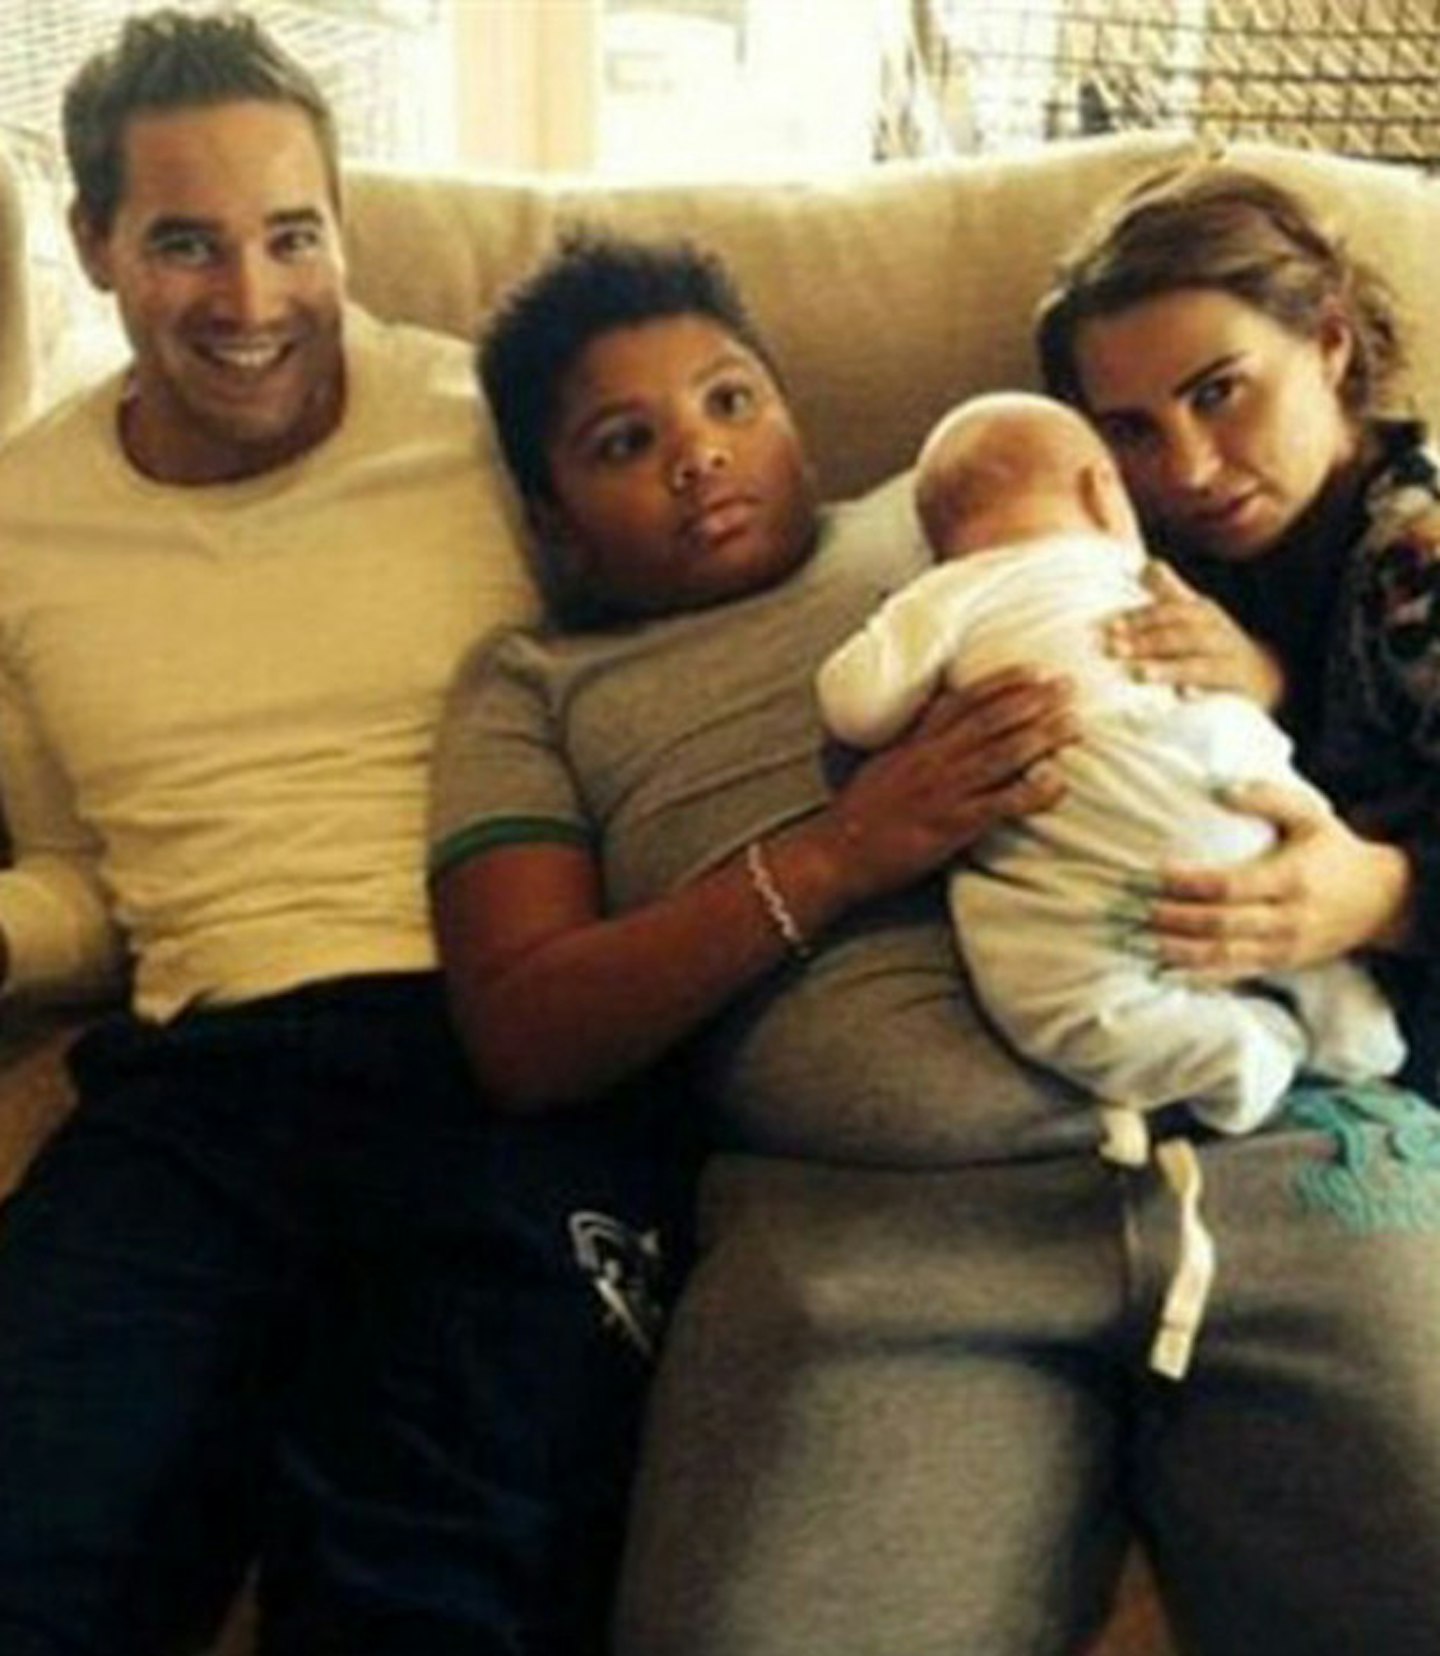 August 2013: Katie Price welcomed son Jett